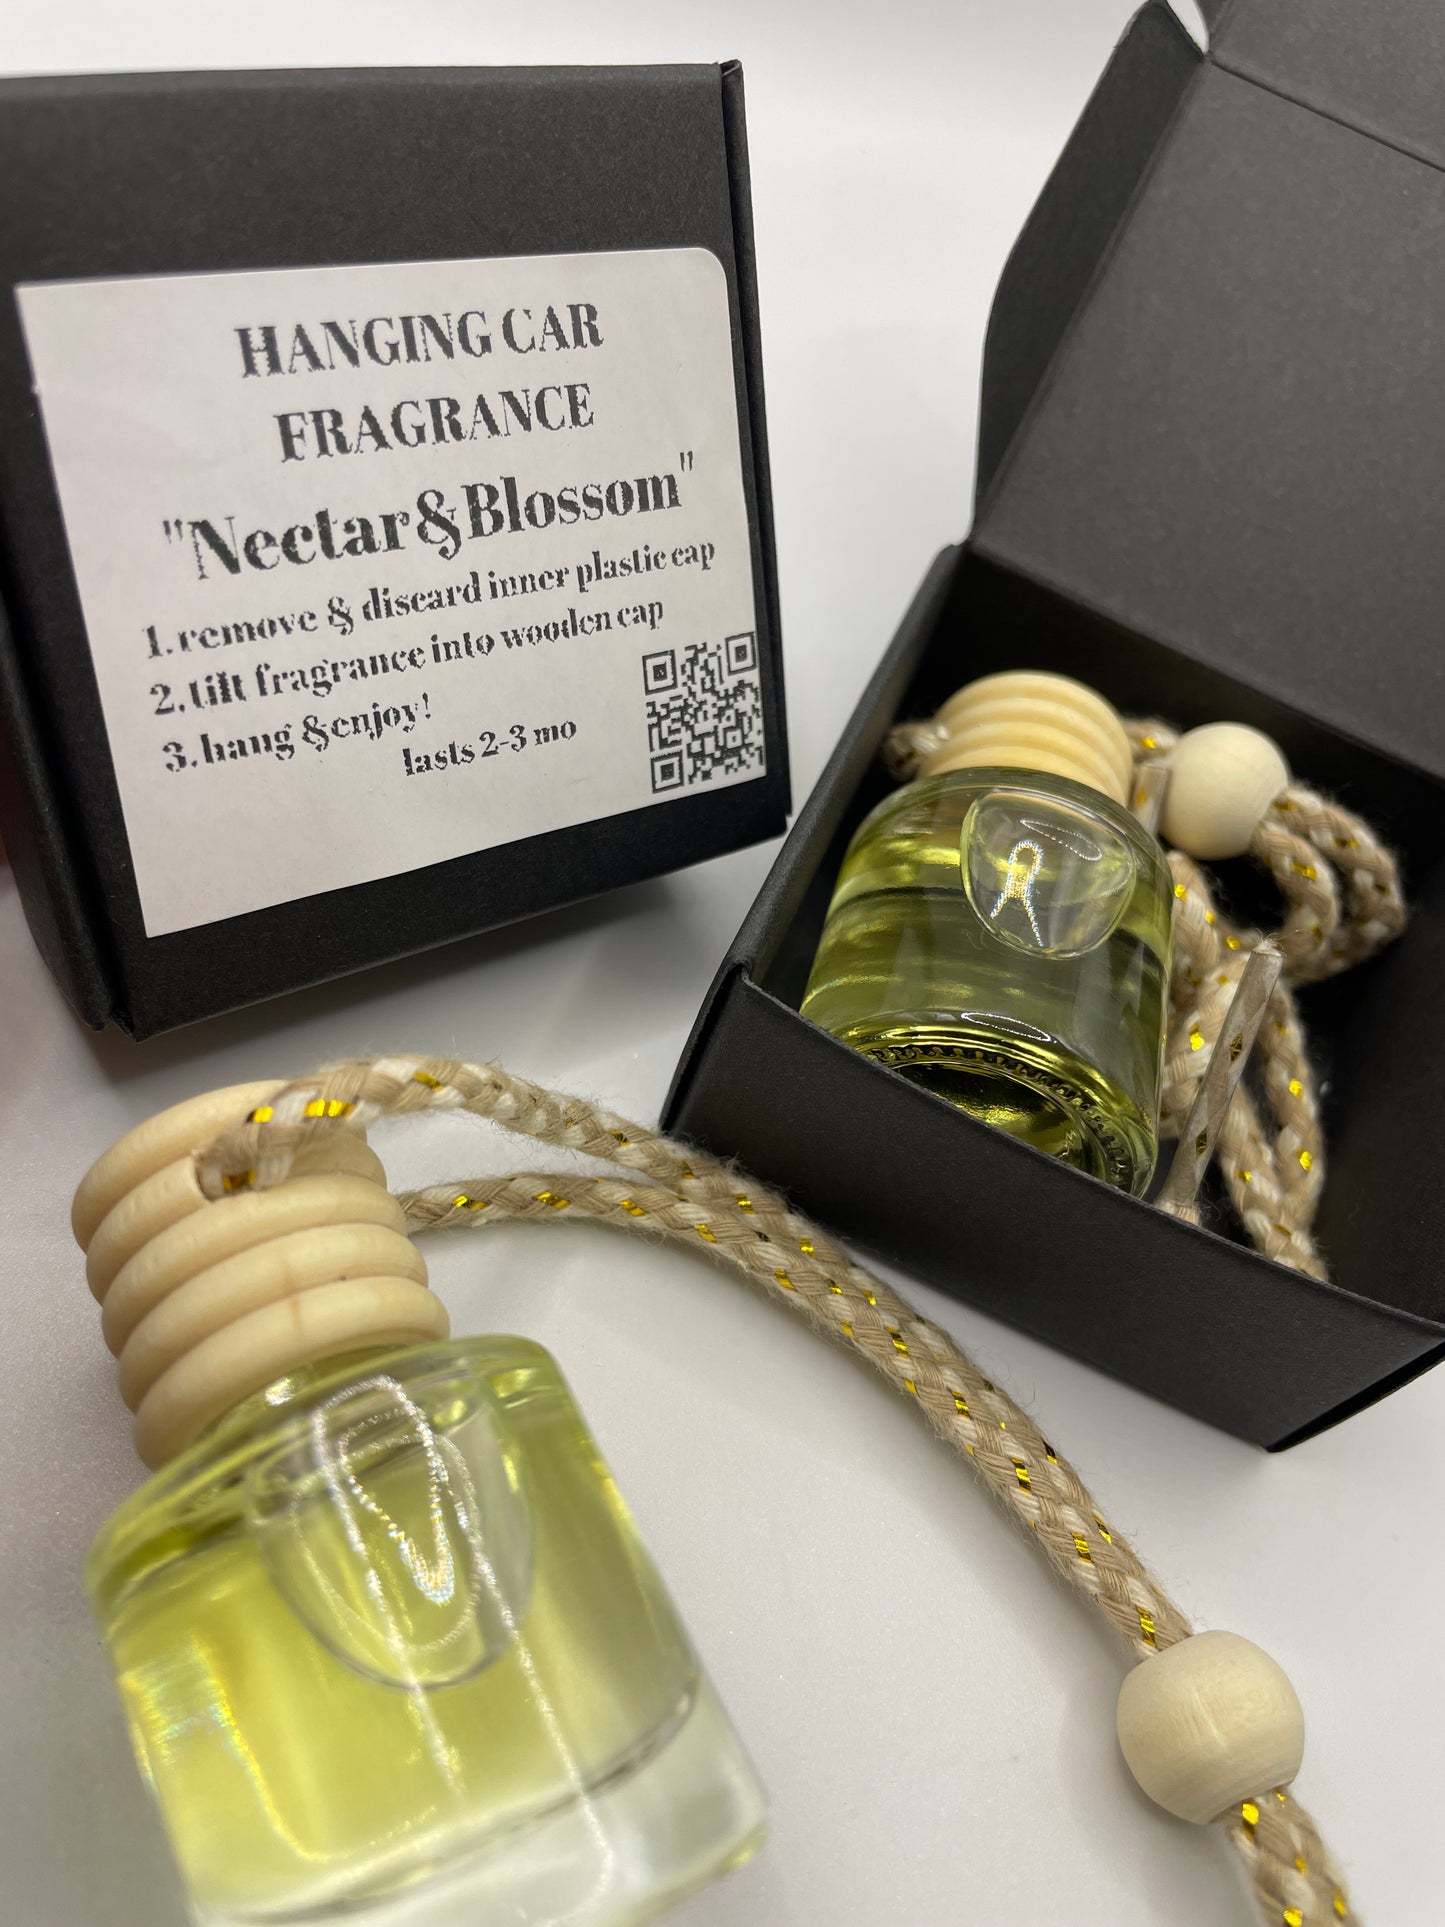 Hanging car fragrance - nectar & blossom